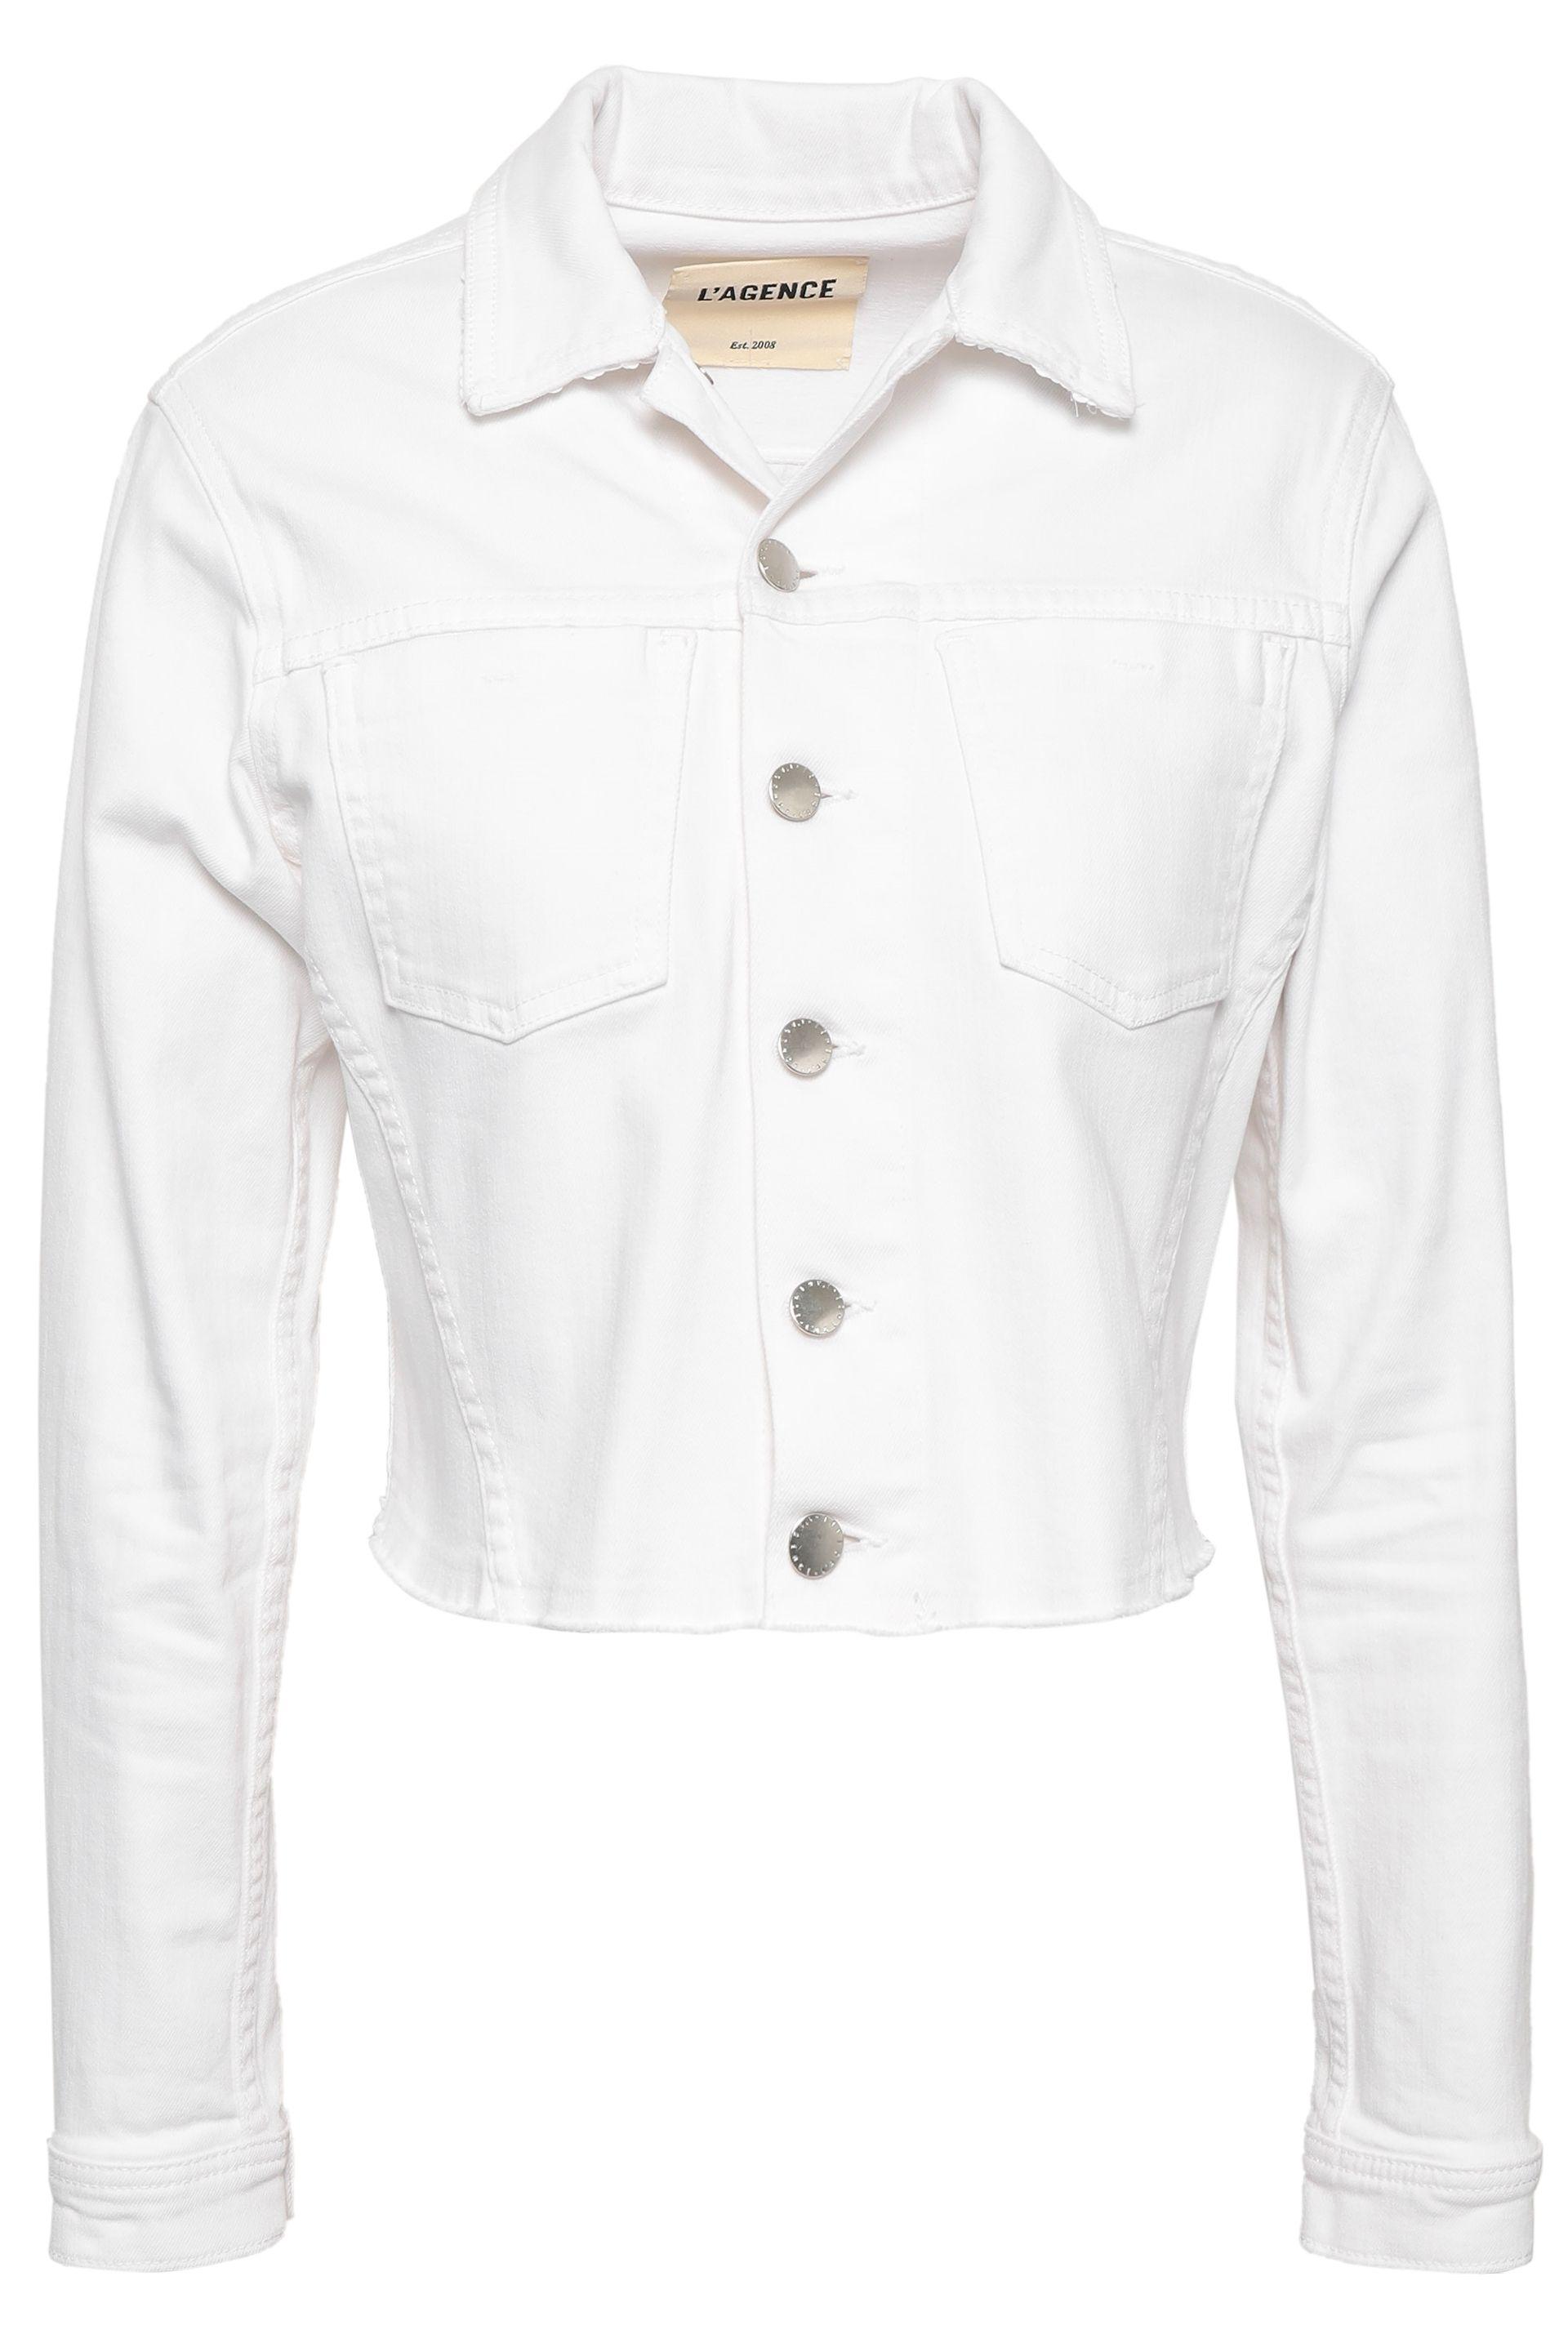 L'Agence Sequined Denim Jacket White - Lyst